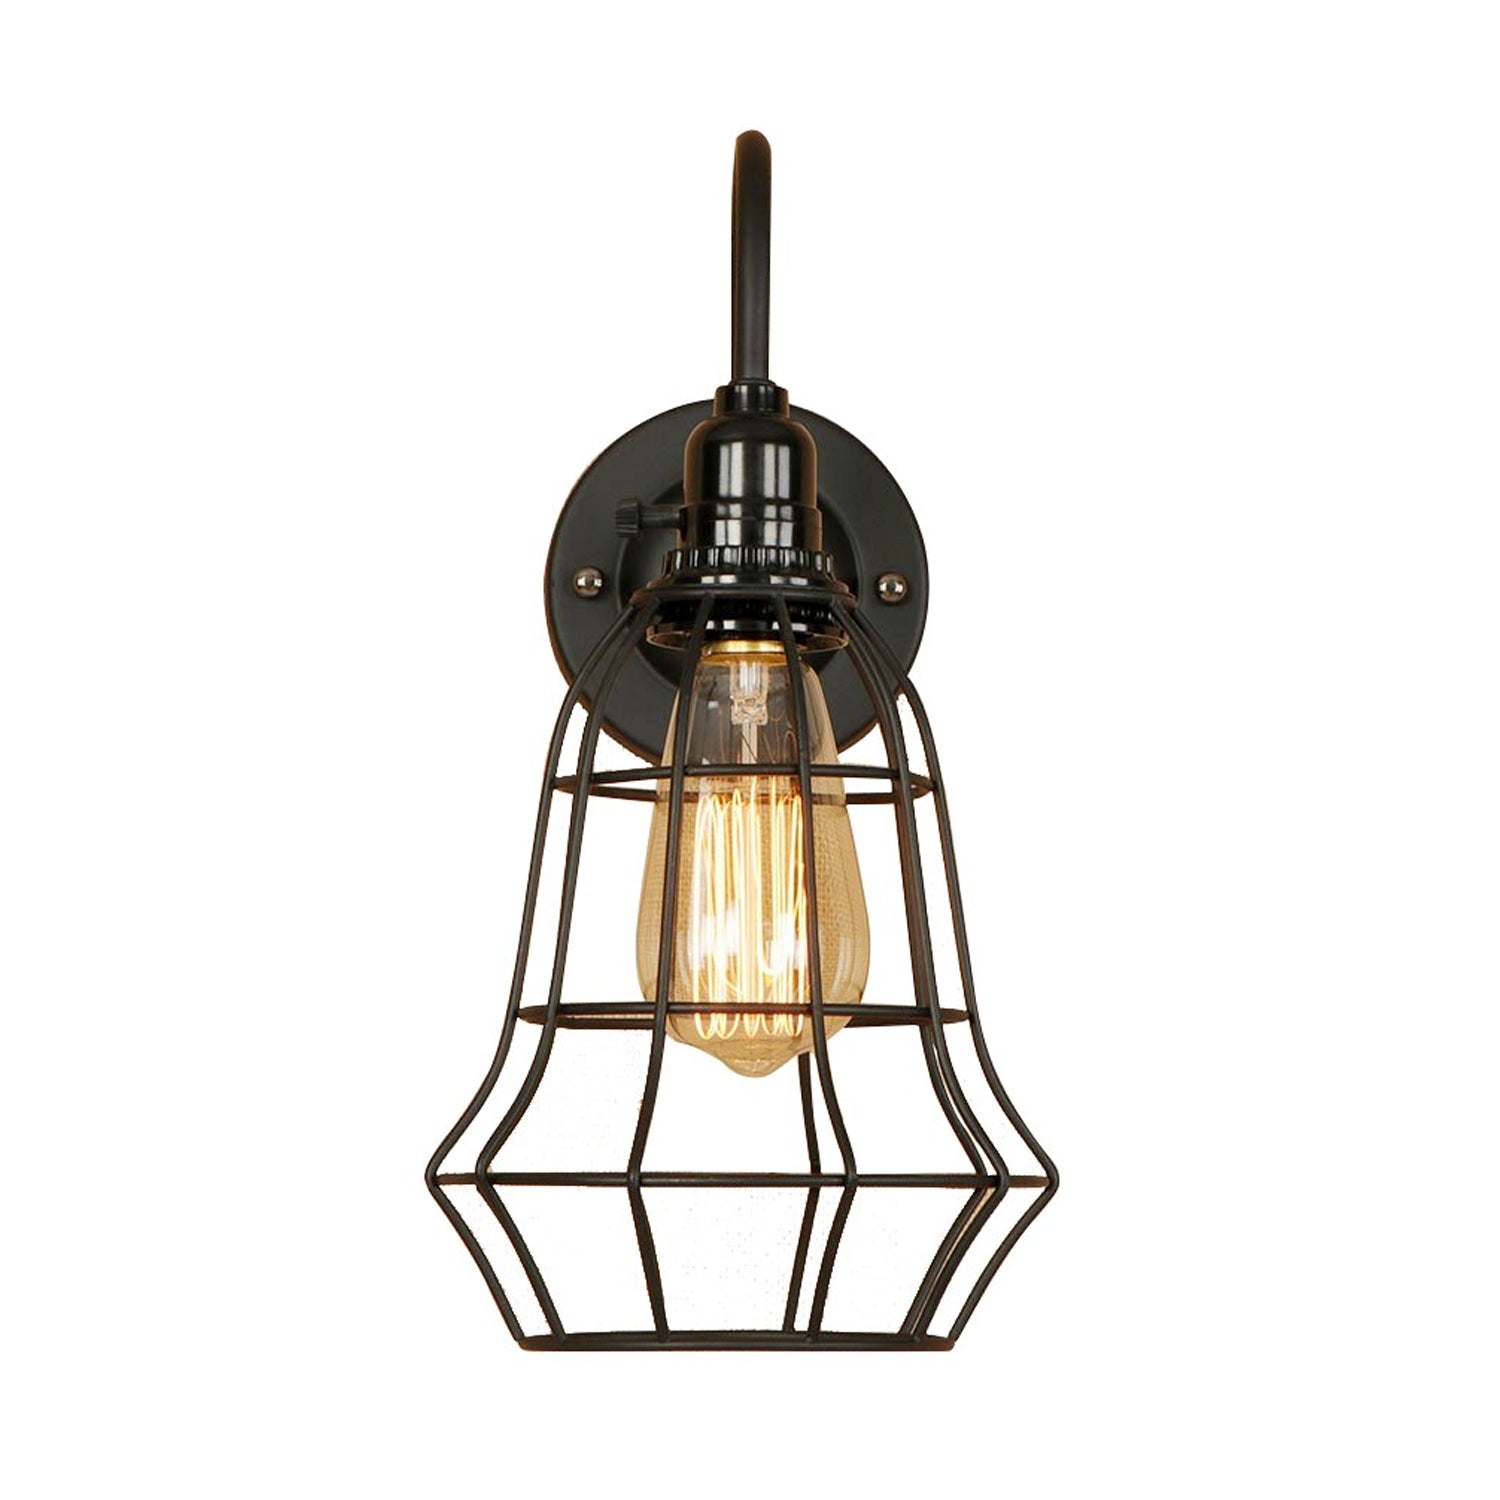 Vintage Industrial Retro Wall Light Rustic Pulley Indoor Sconce Lamp Fixture~2669 - LEDSone UK Ltd